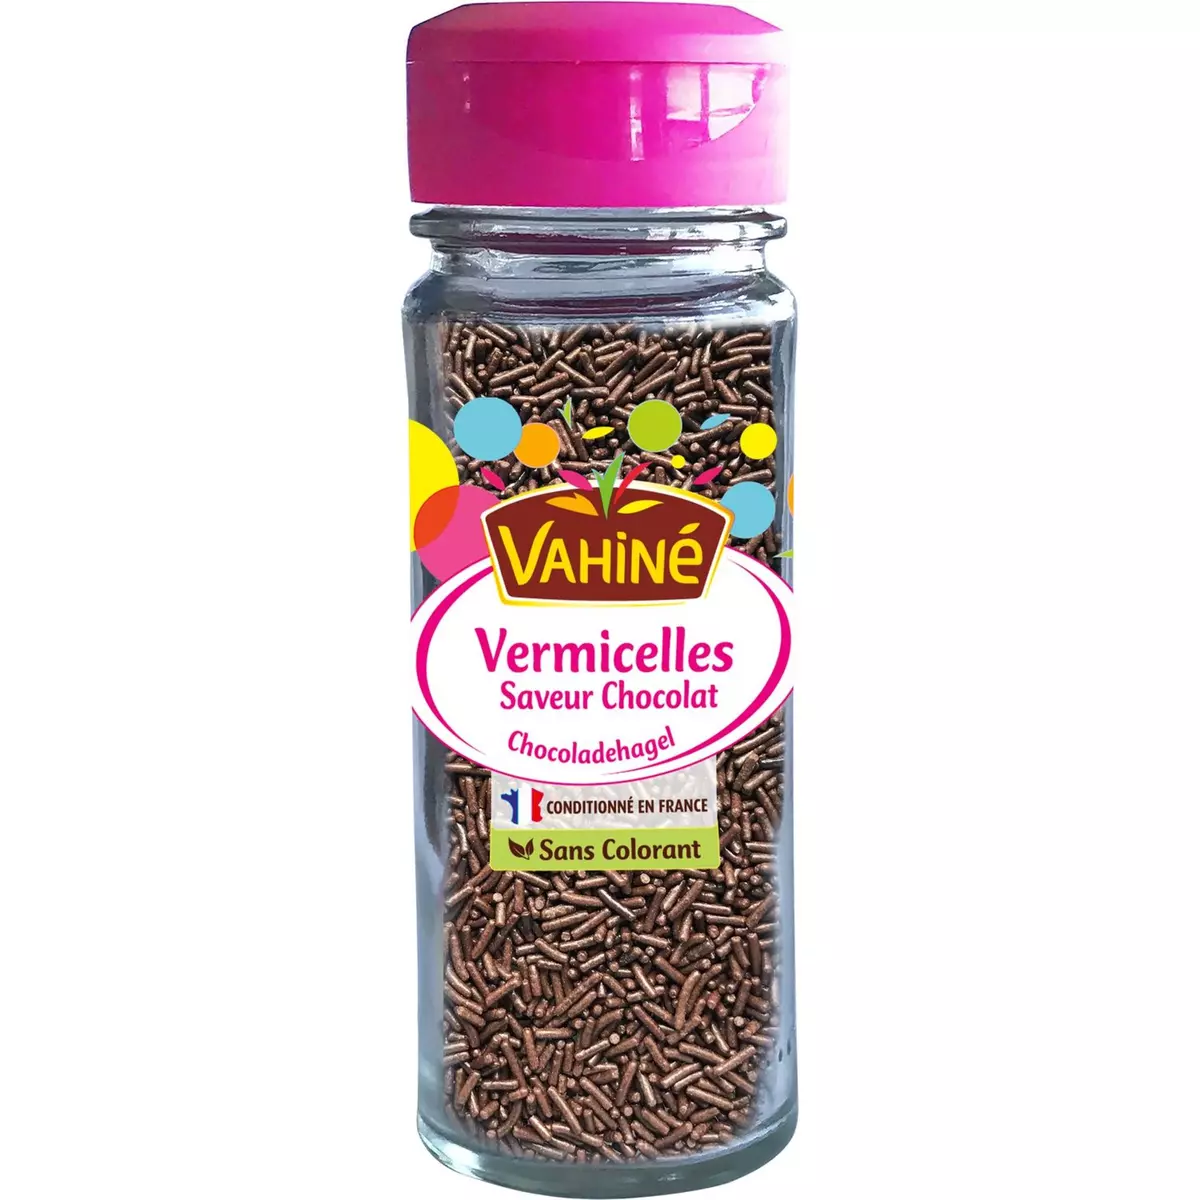 VAHINE Vahine vermicelle chocolat 65g